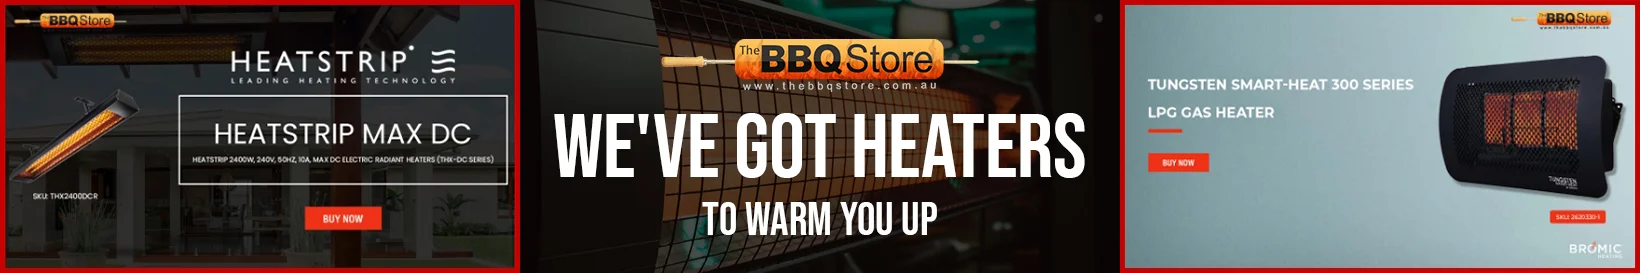 shop now heatstrip lpg gas heater for sale from bbq store sydney